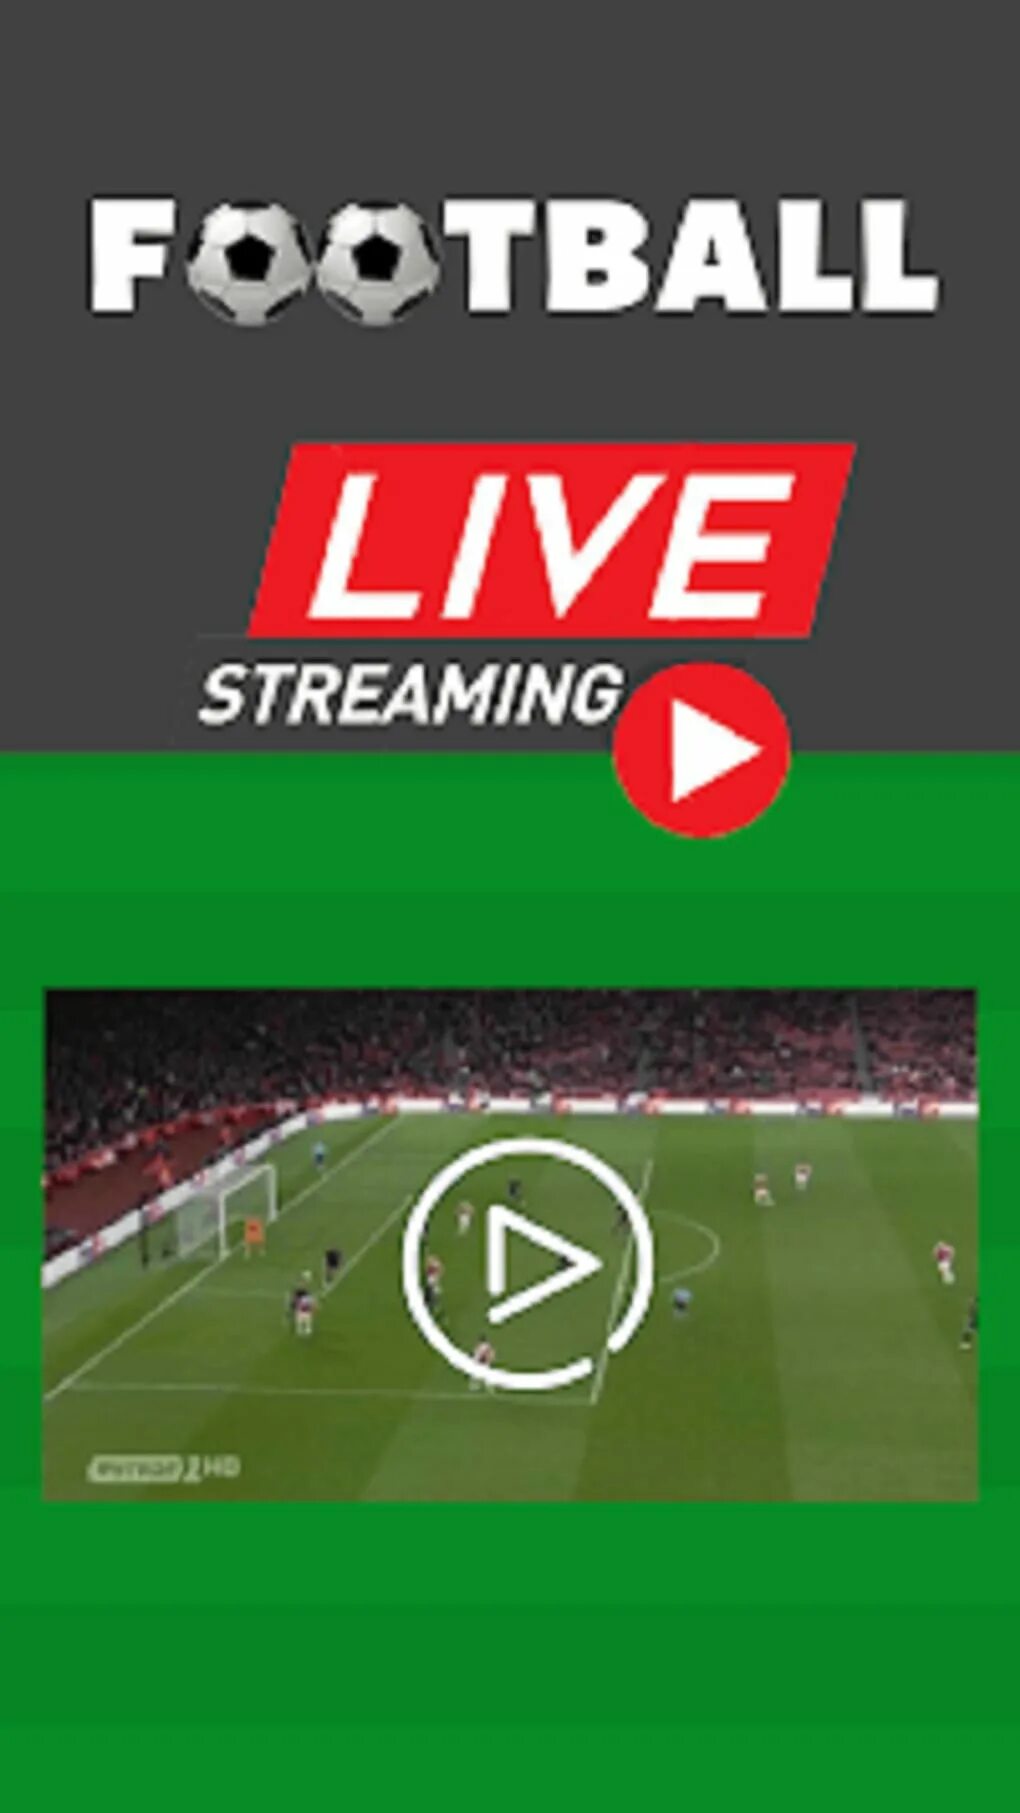 Live streaming Football. Футбольный стрим. Live Football TV.